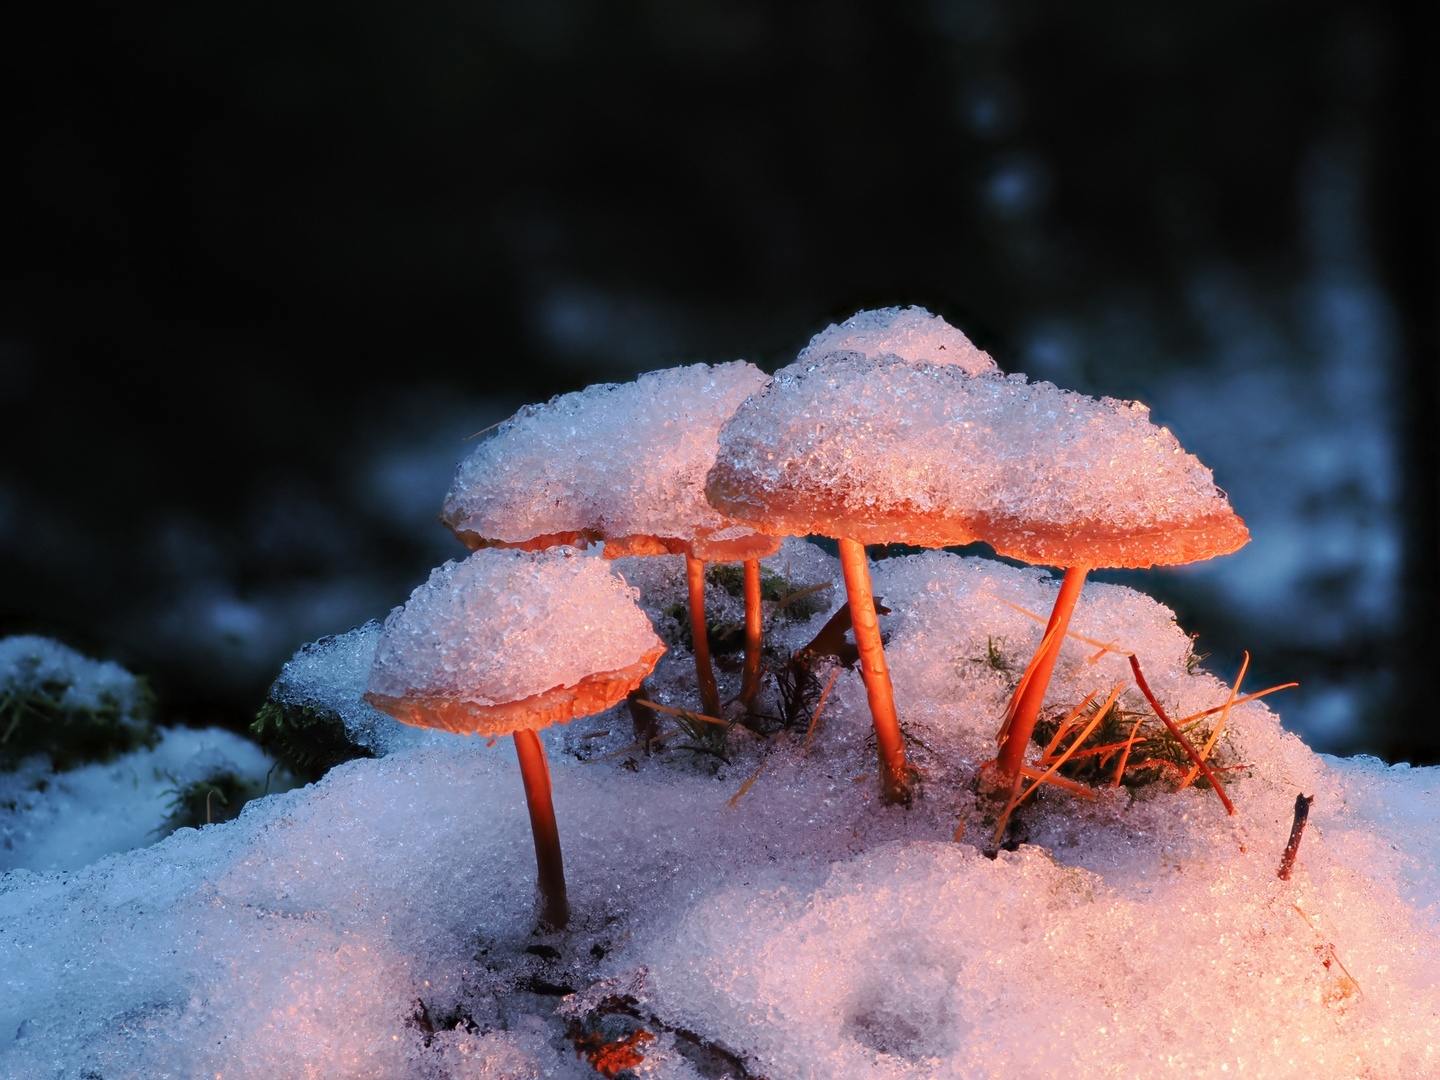 Pilzgruppe im Schnee